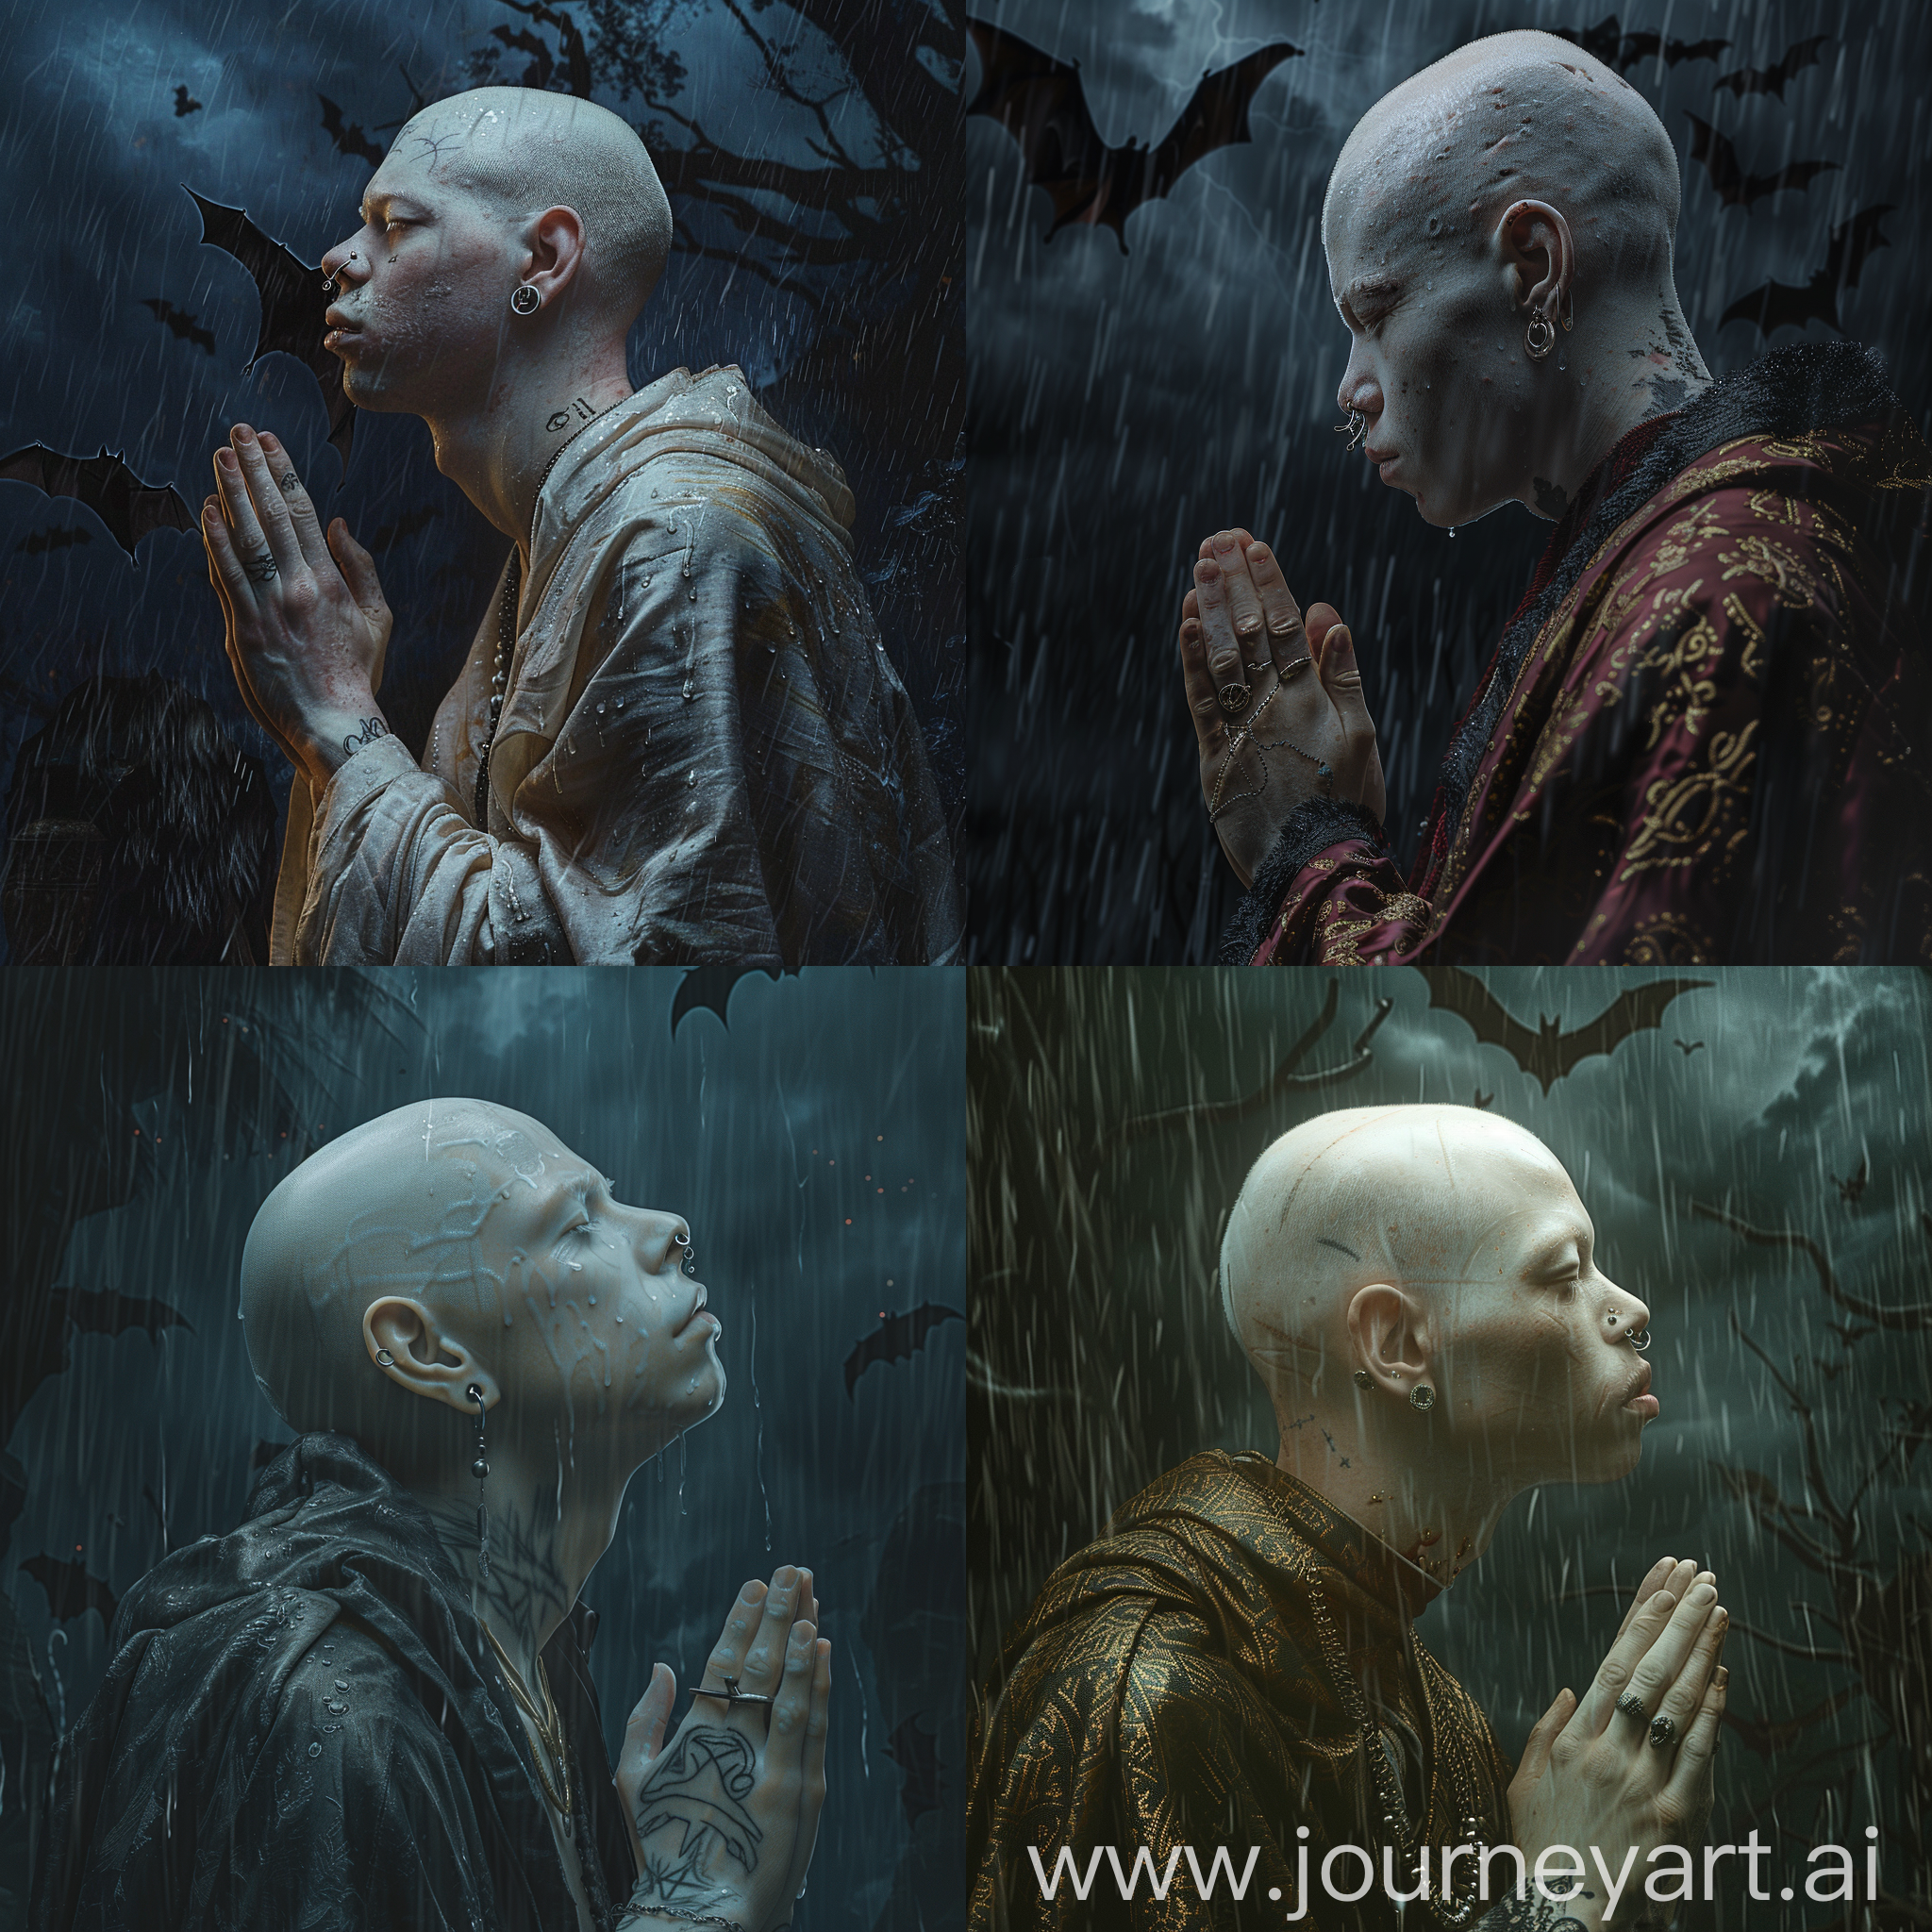 Bald albino man with nose piercings, praying, wearing sorcerer robes, rainy weather, at dark place, midnight, bats flying, dark eerie, dramatic lighting